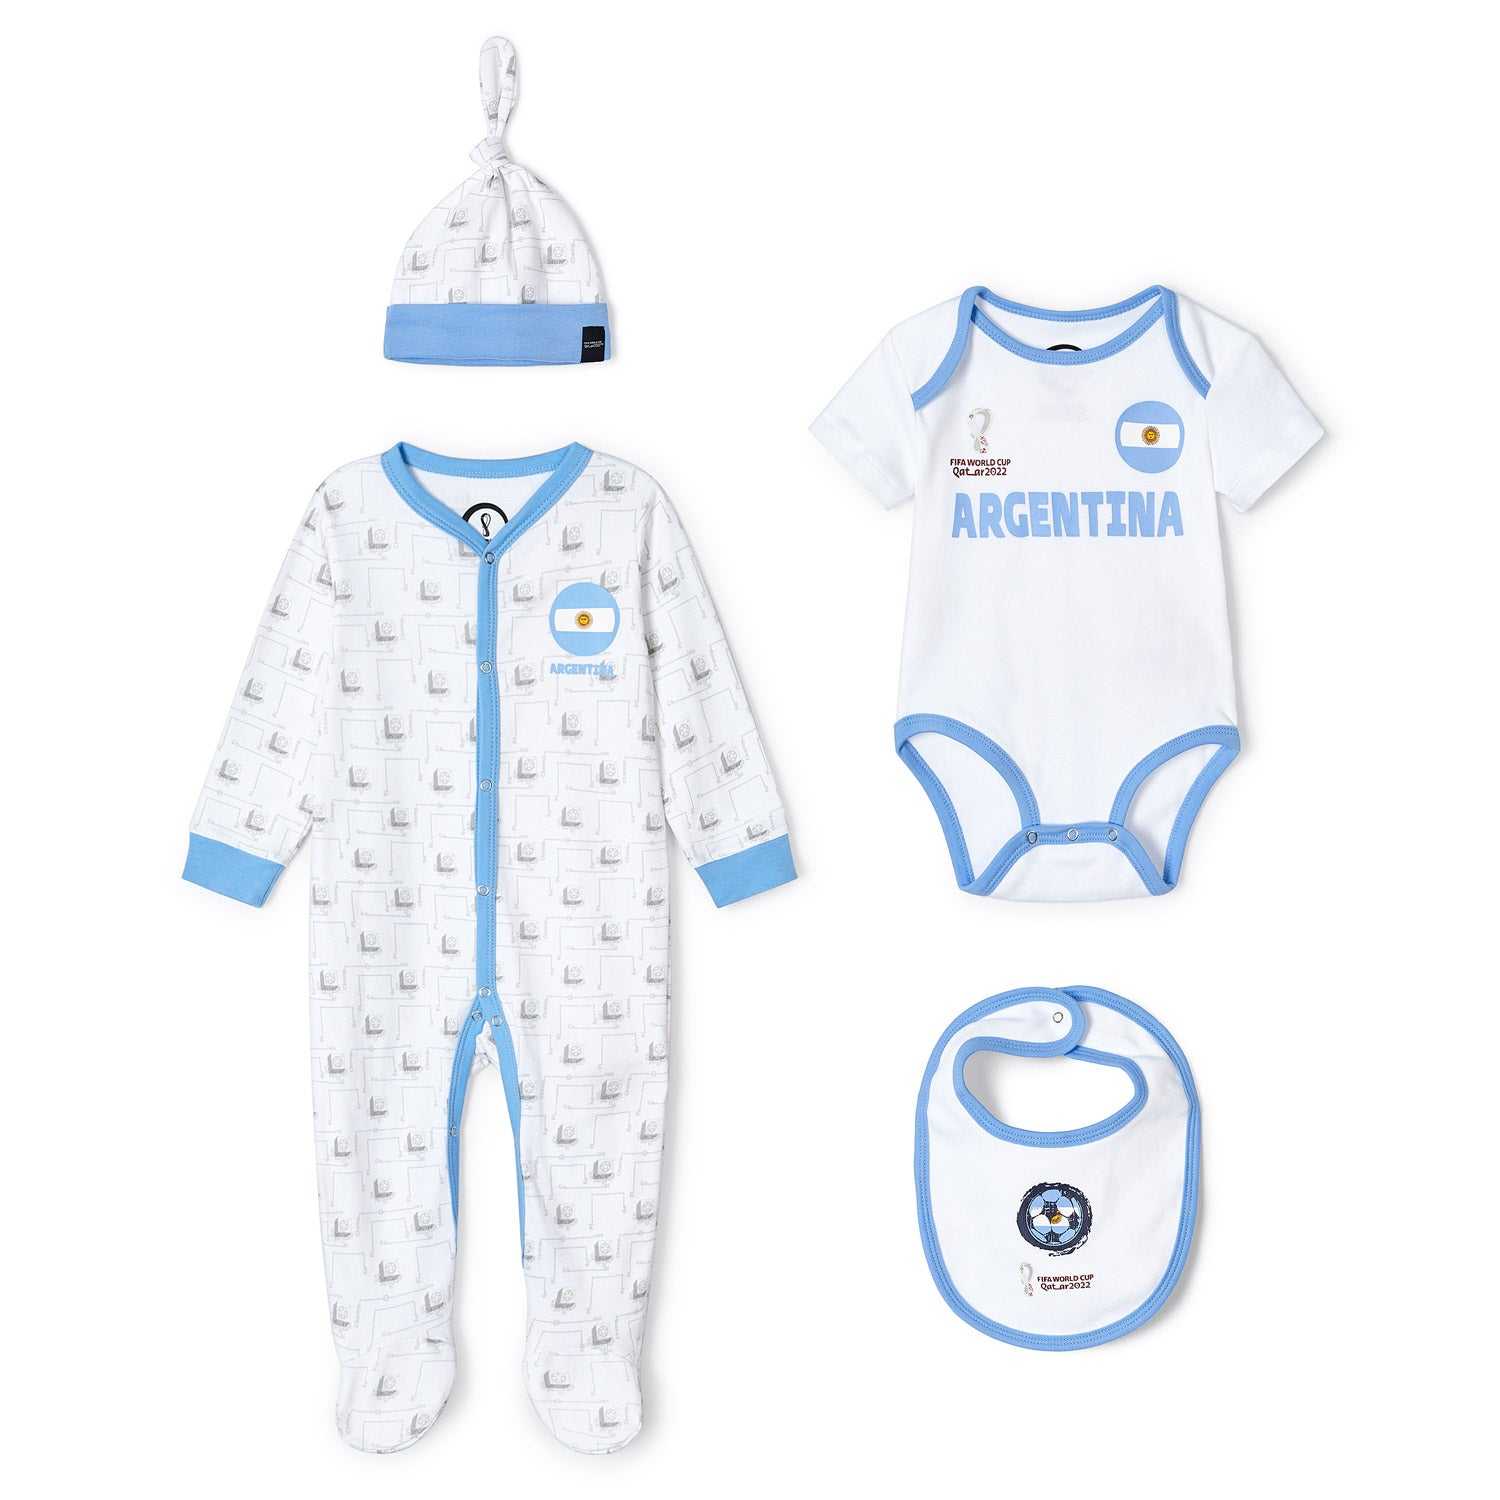 2022 World Cup Argentina White Romper - Infant/Toddler